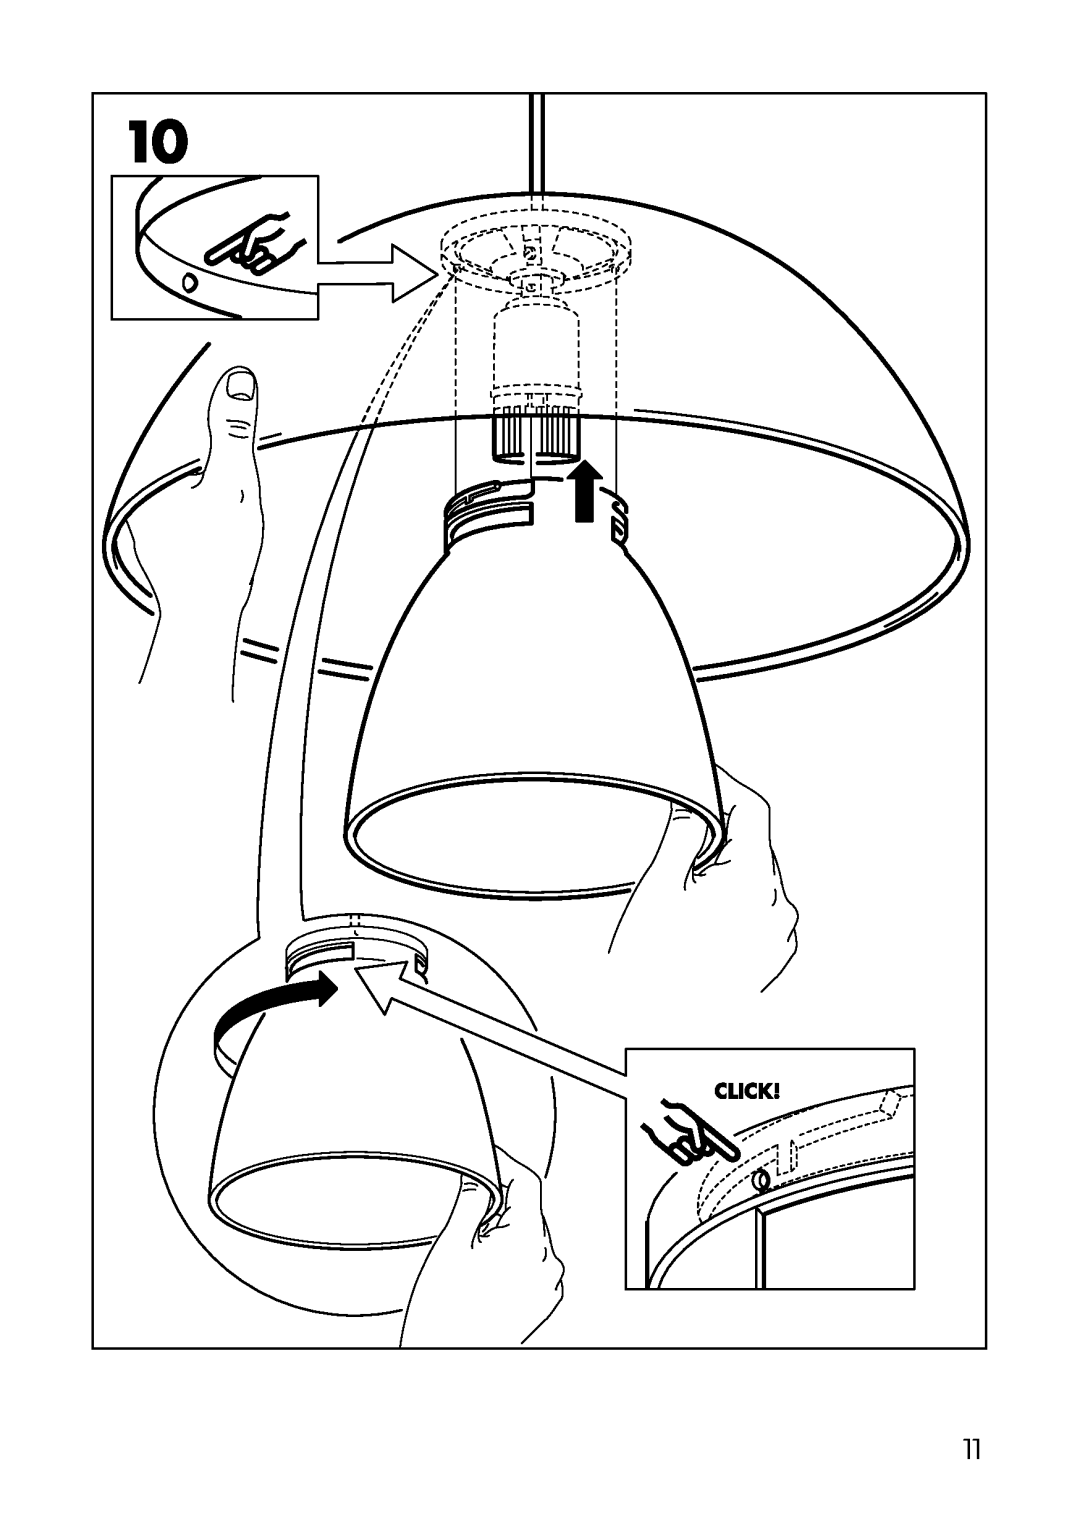 IKEA AA-322649-2 manual 